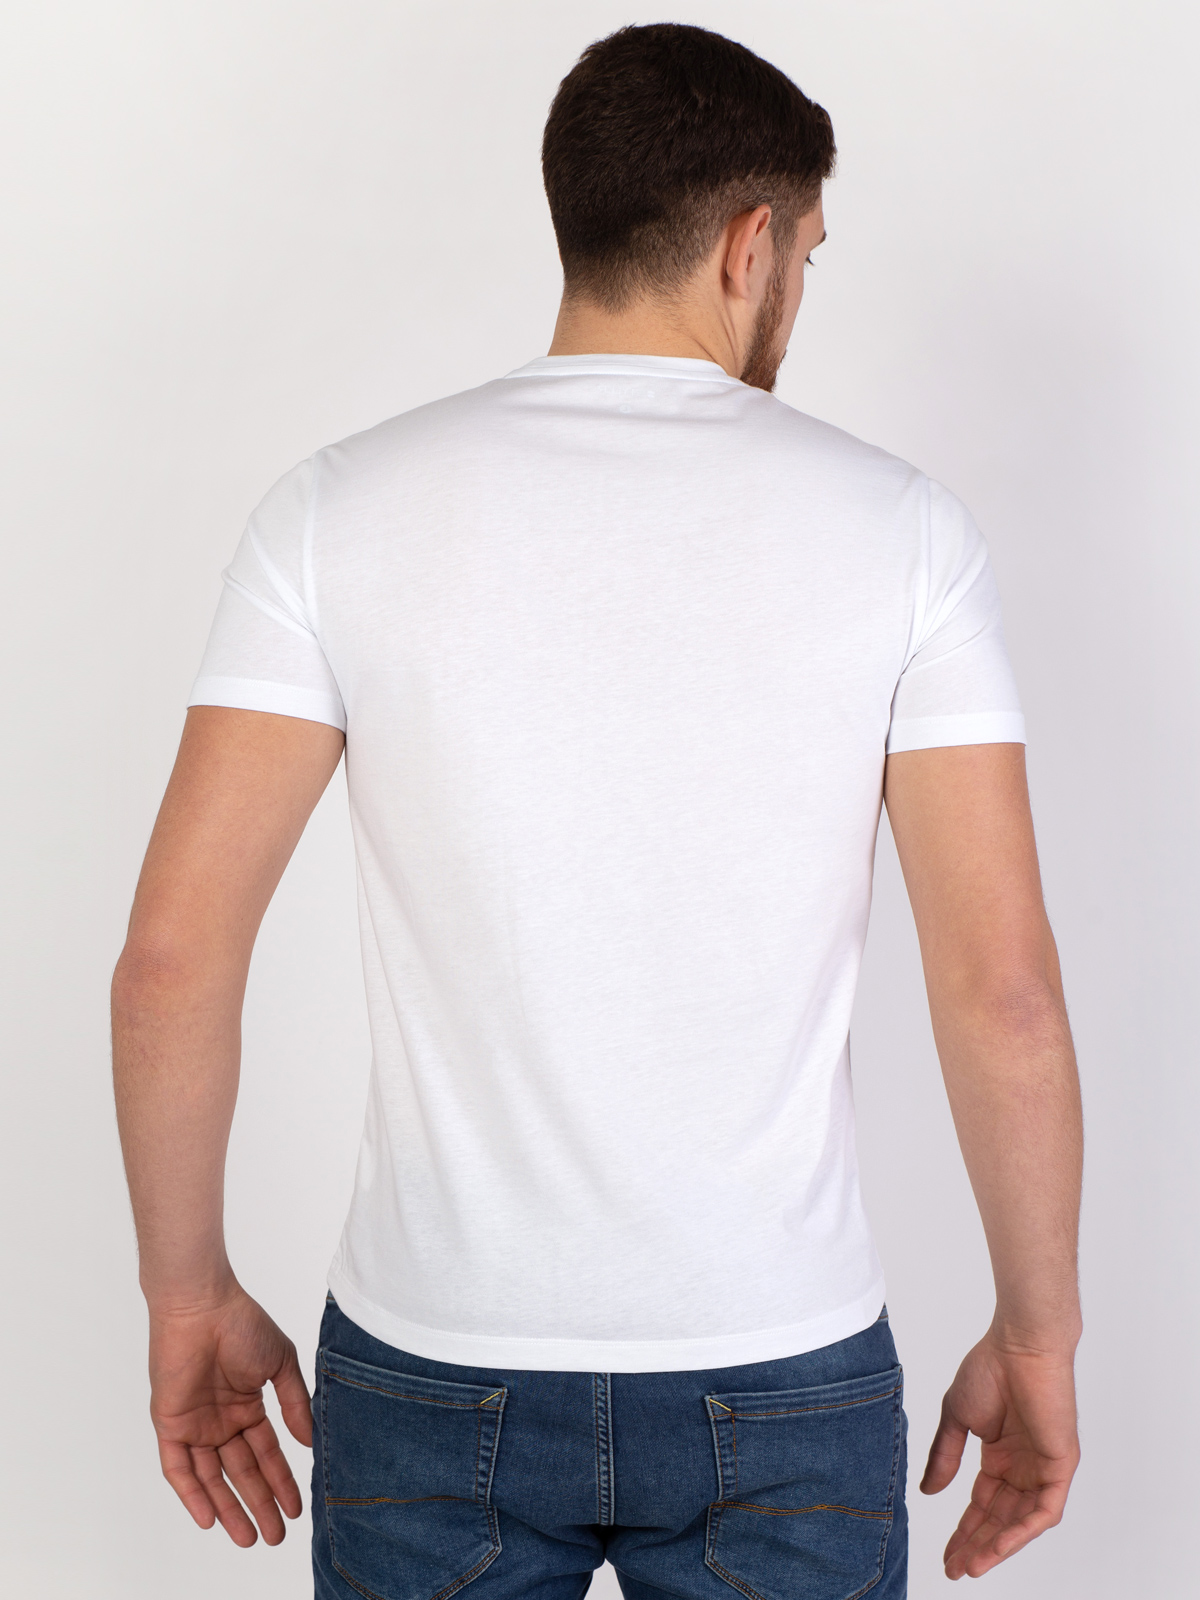 White tshirt with colored honeycomb pri - 96402 € 16.31 img3